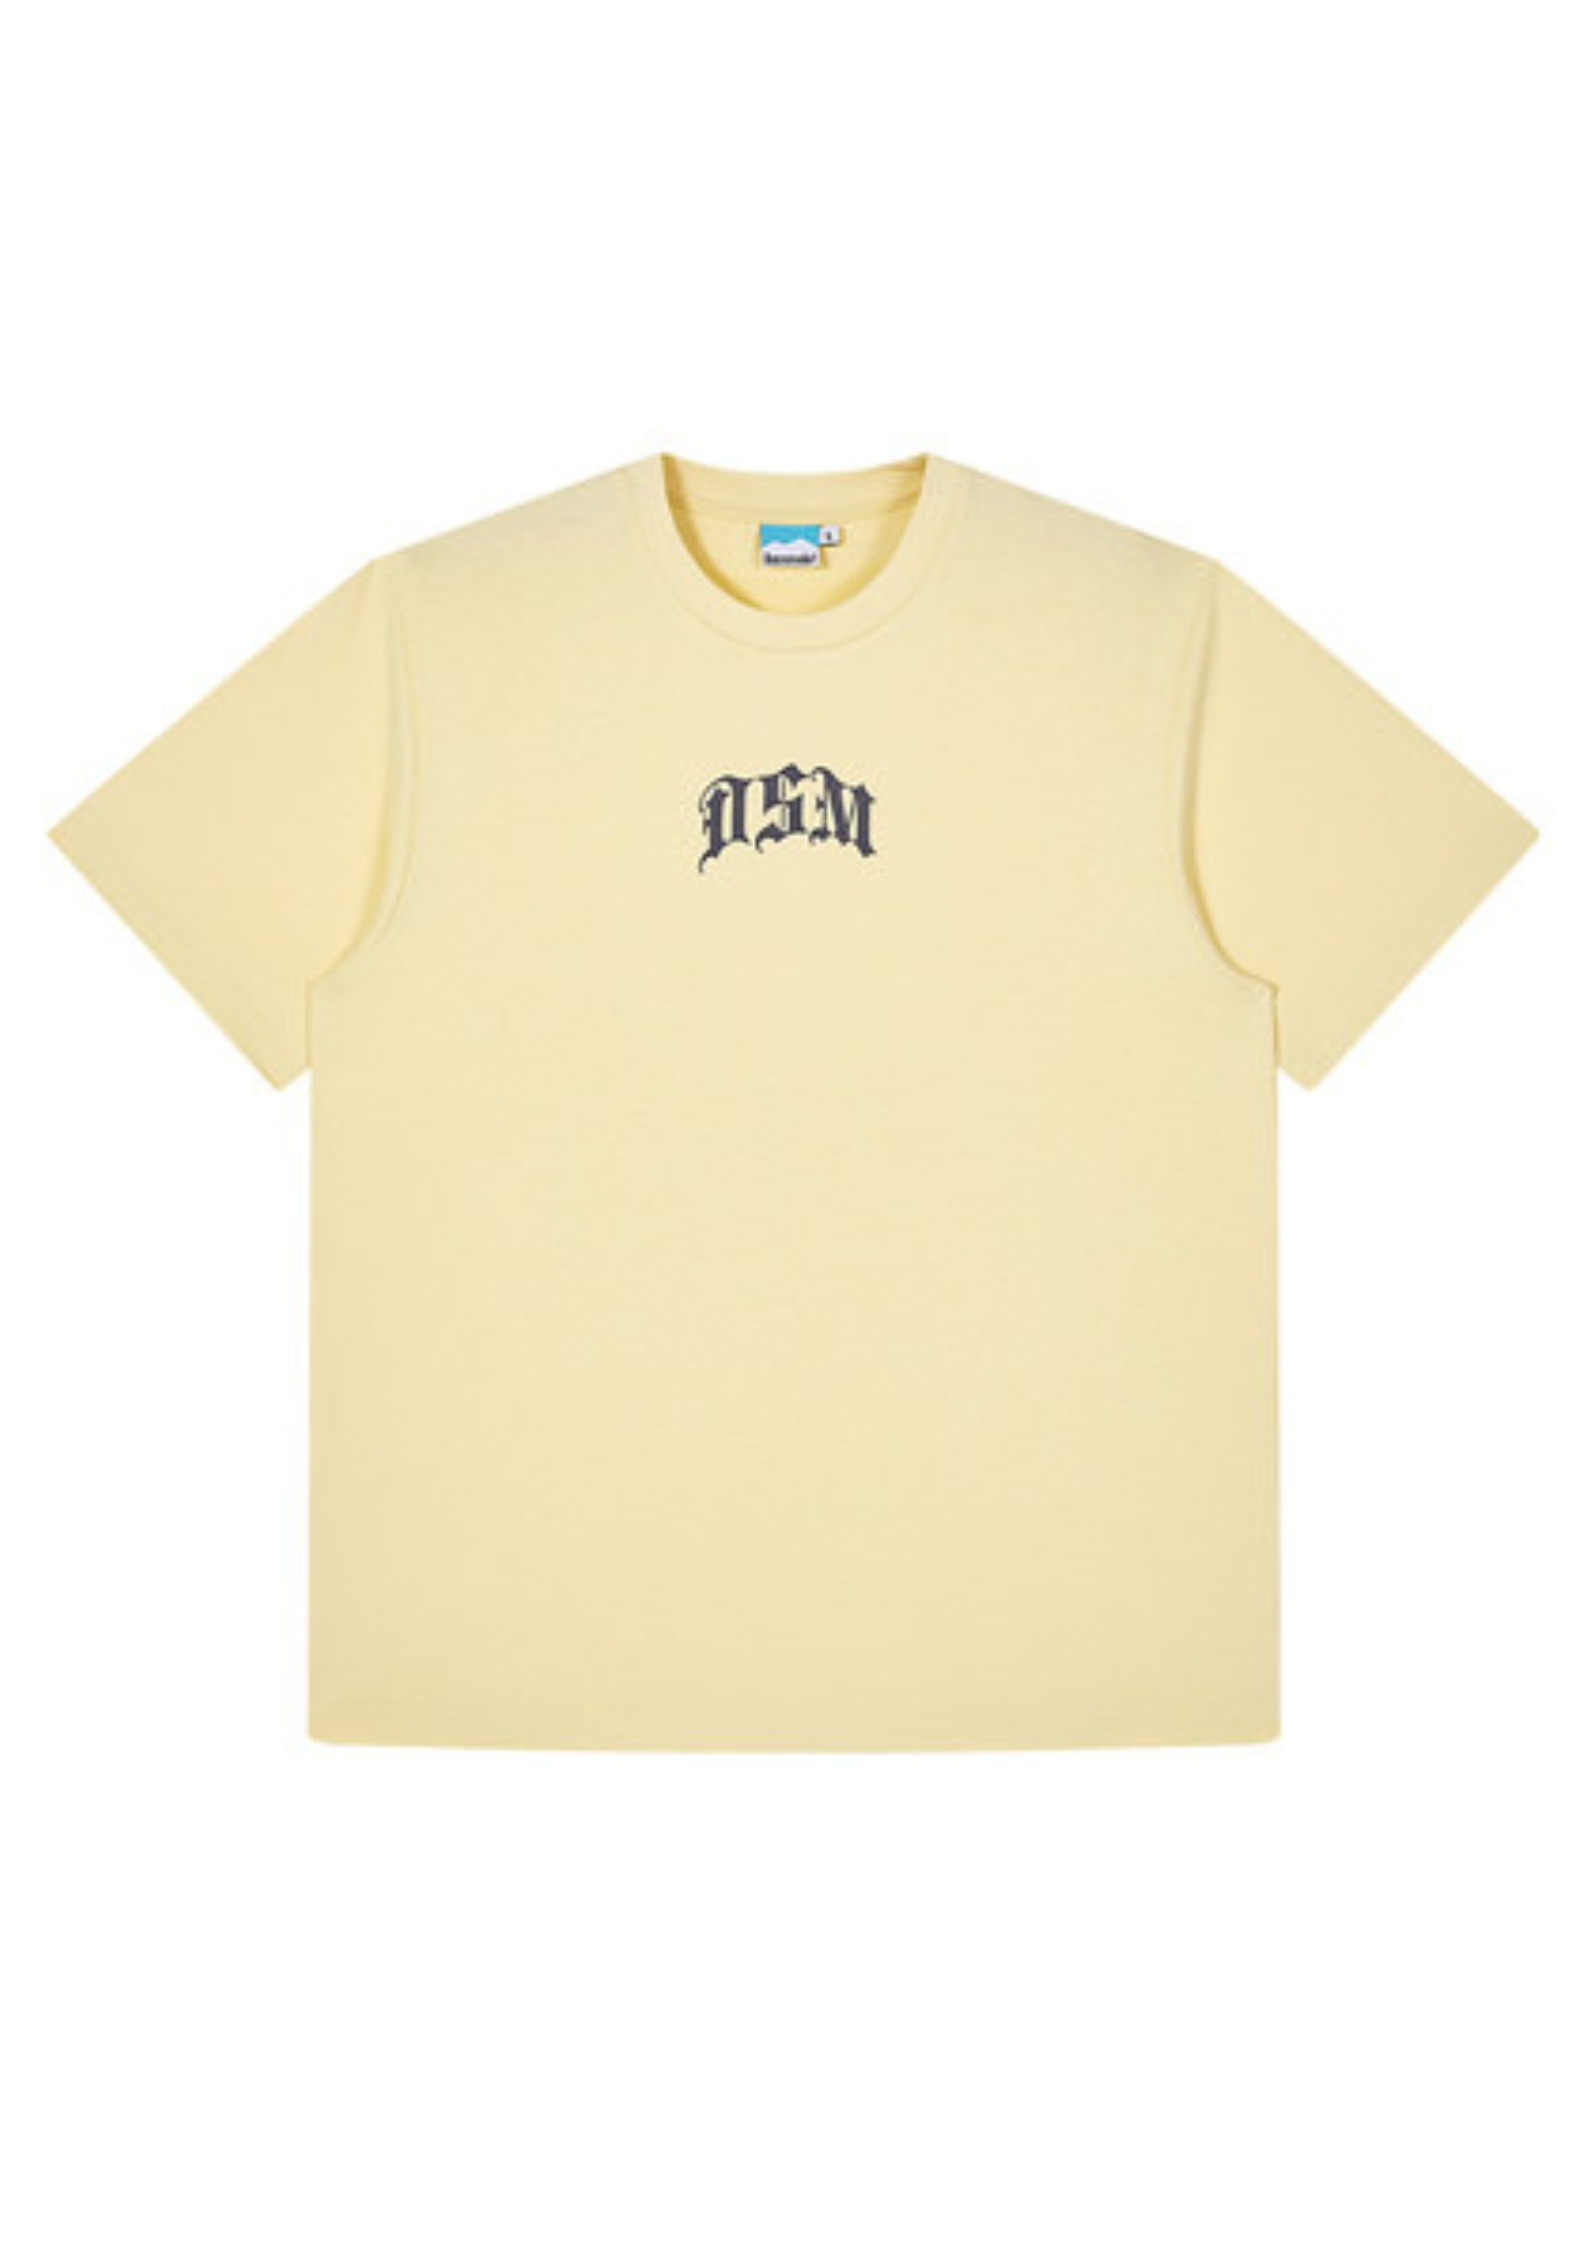 DONSMOKE Abbreviated Small Logo Printed T-Shirt ( Yellow)